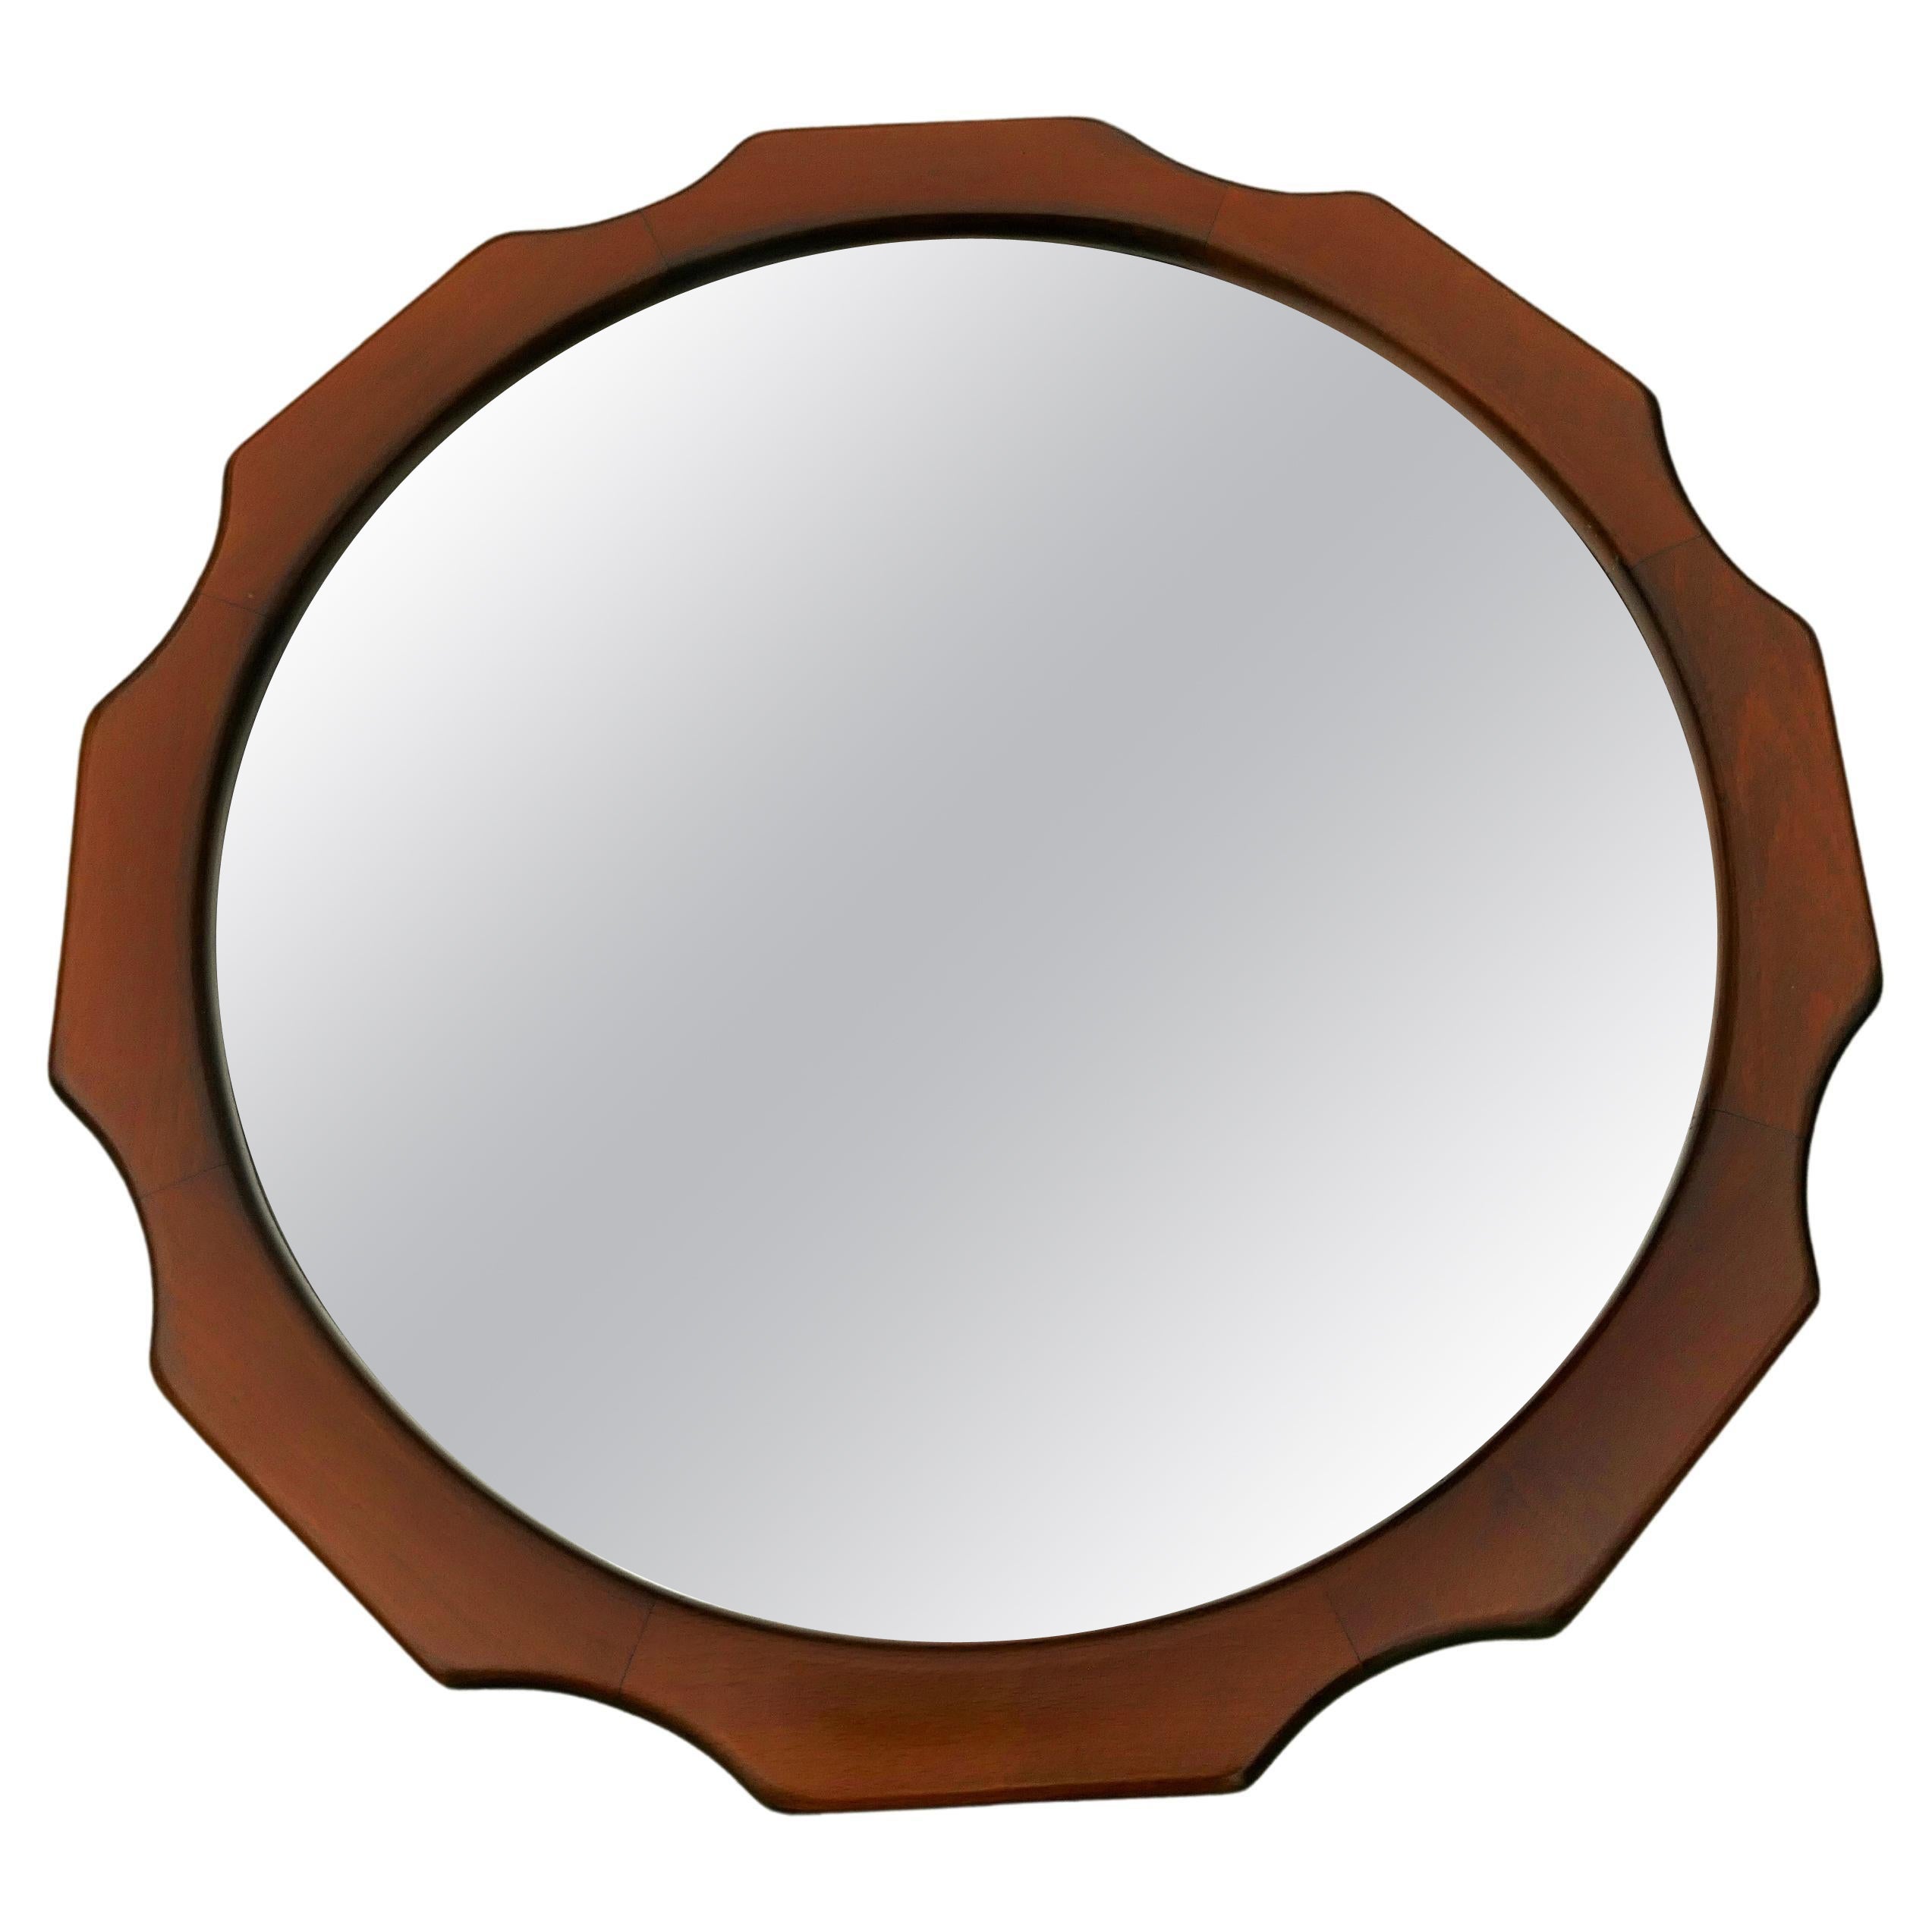 Wooden mirror Italian manufacture